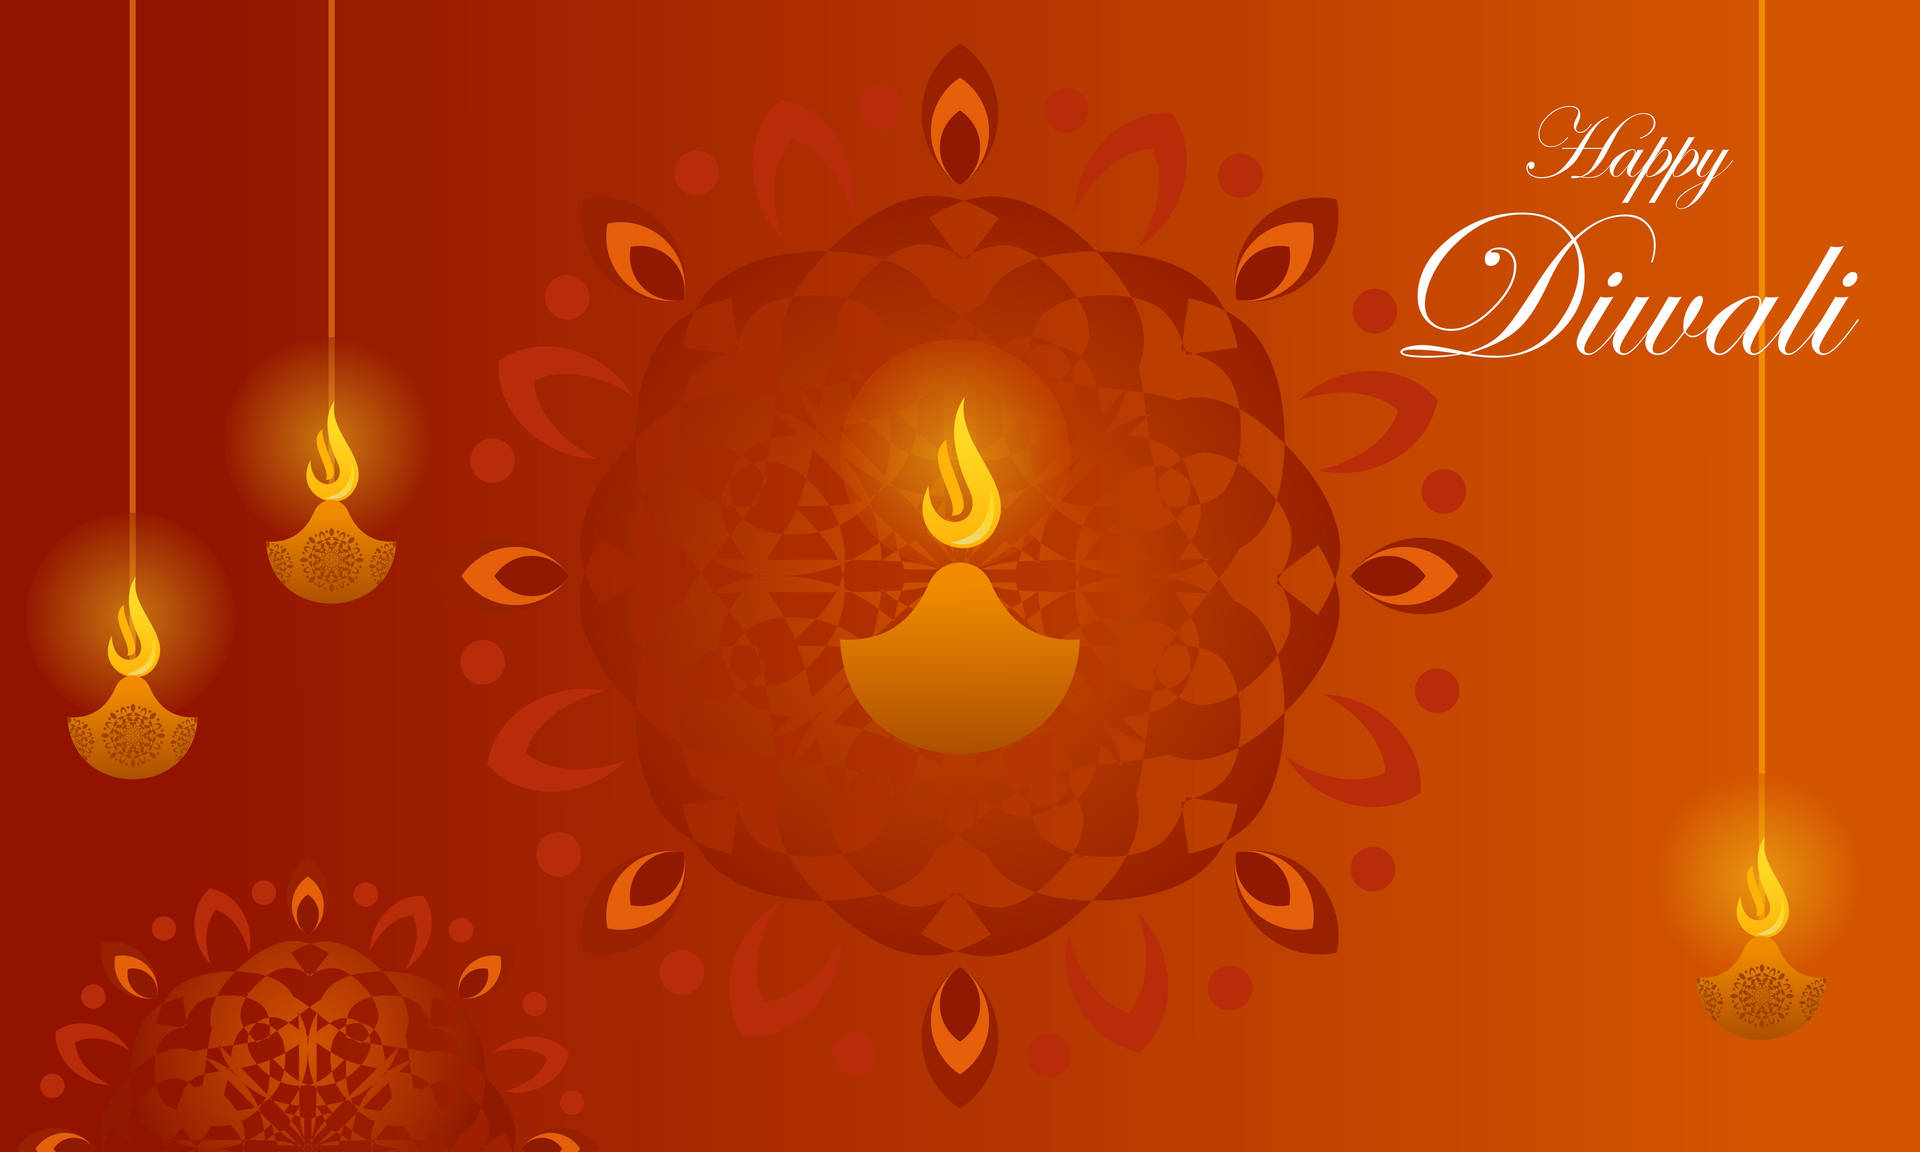 Happy Diwali Orange Oil Lamps Wallpaper